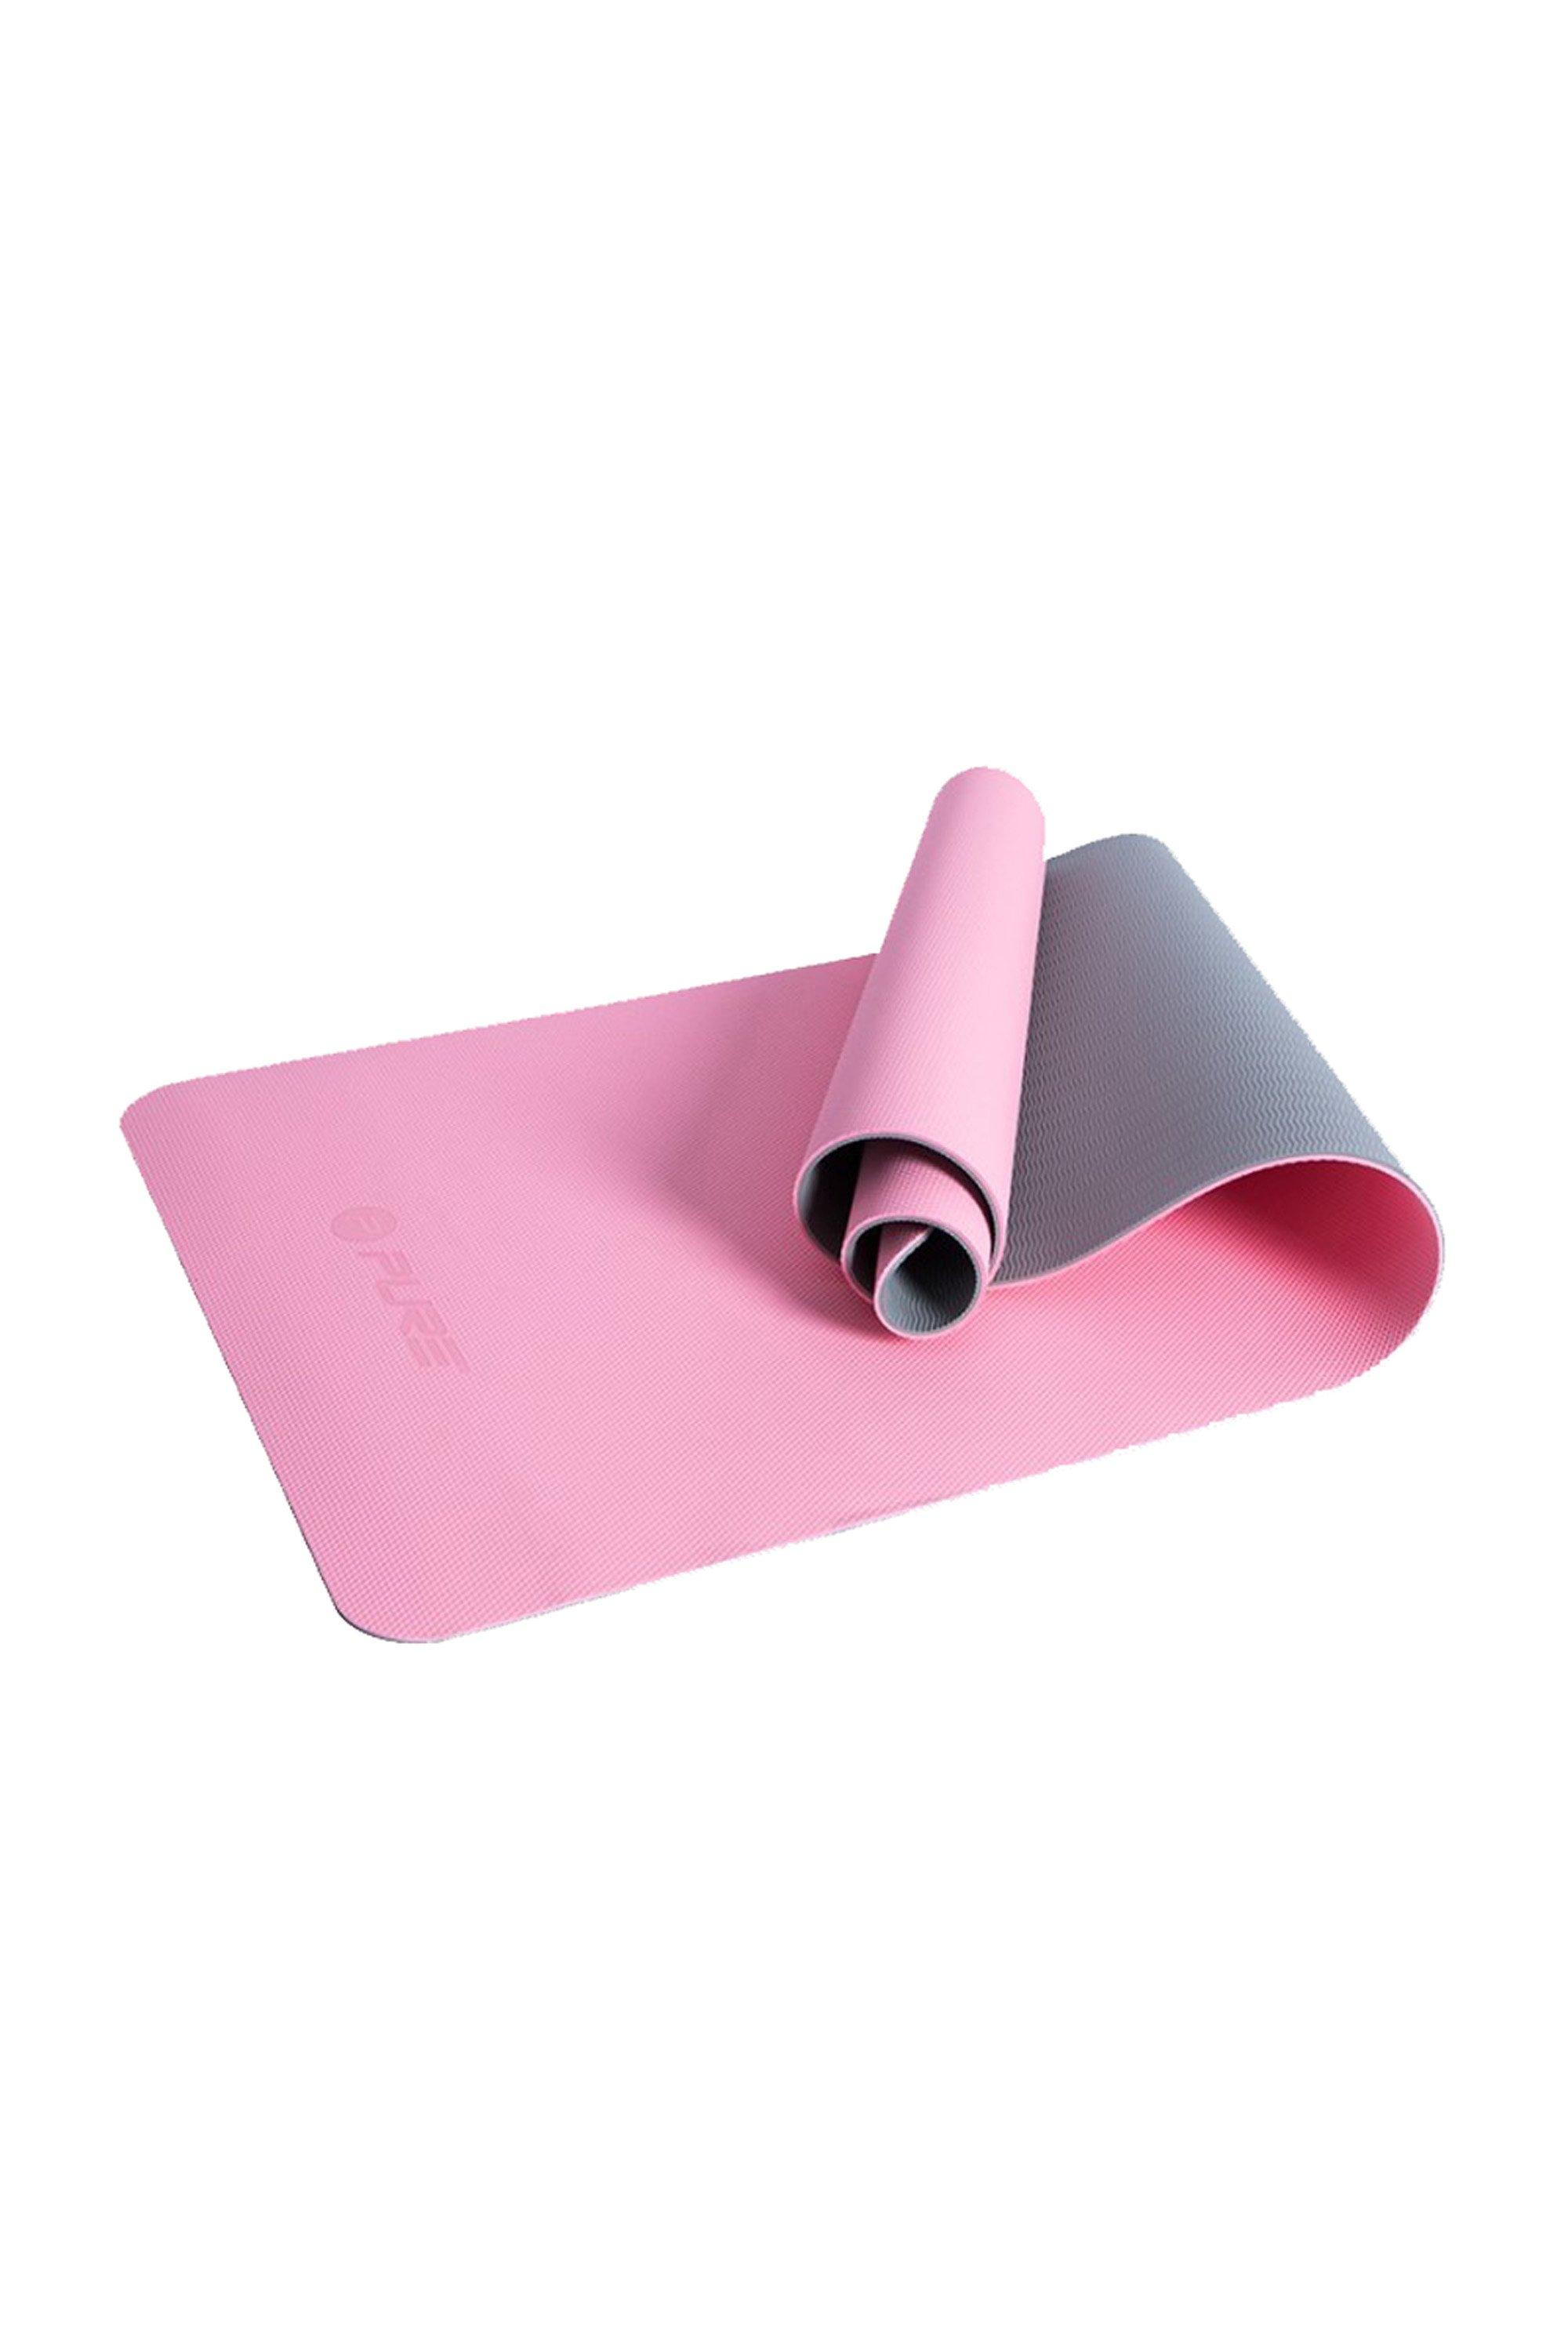 Pure2Improve Yoga Mat - Pink/Grey|